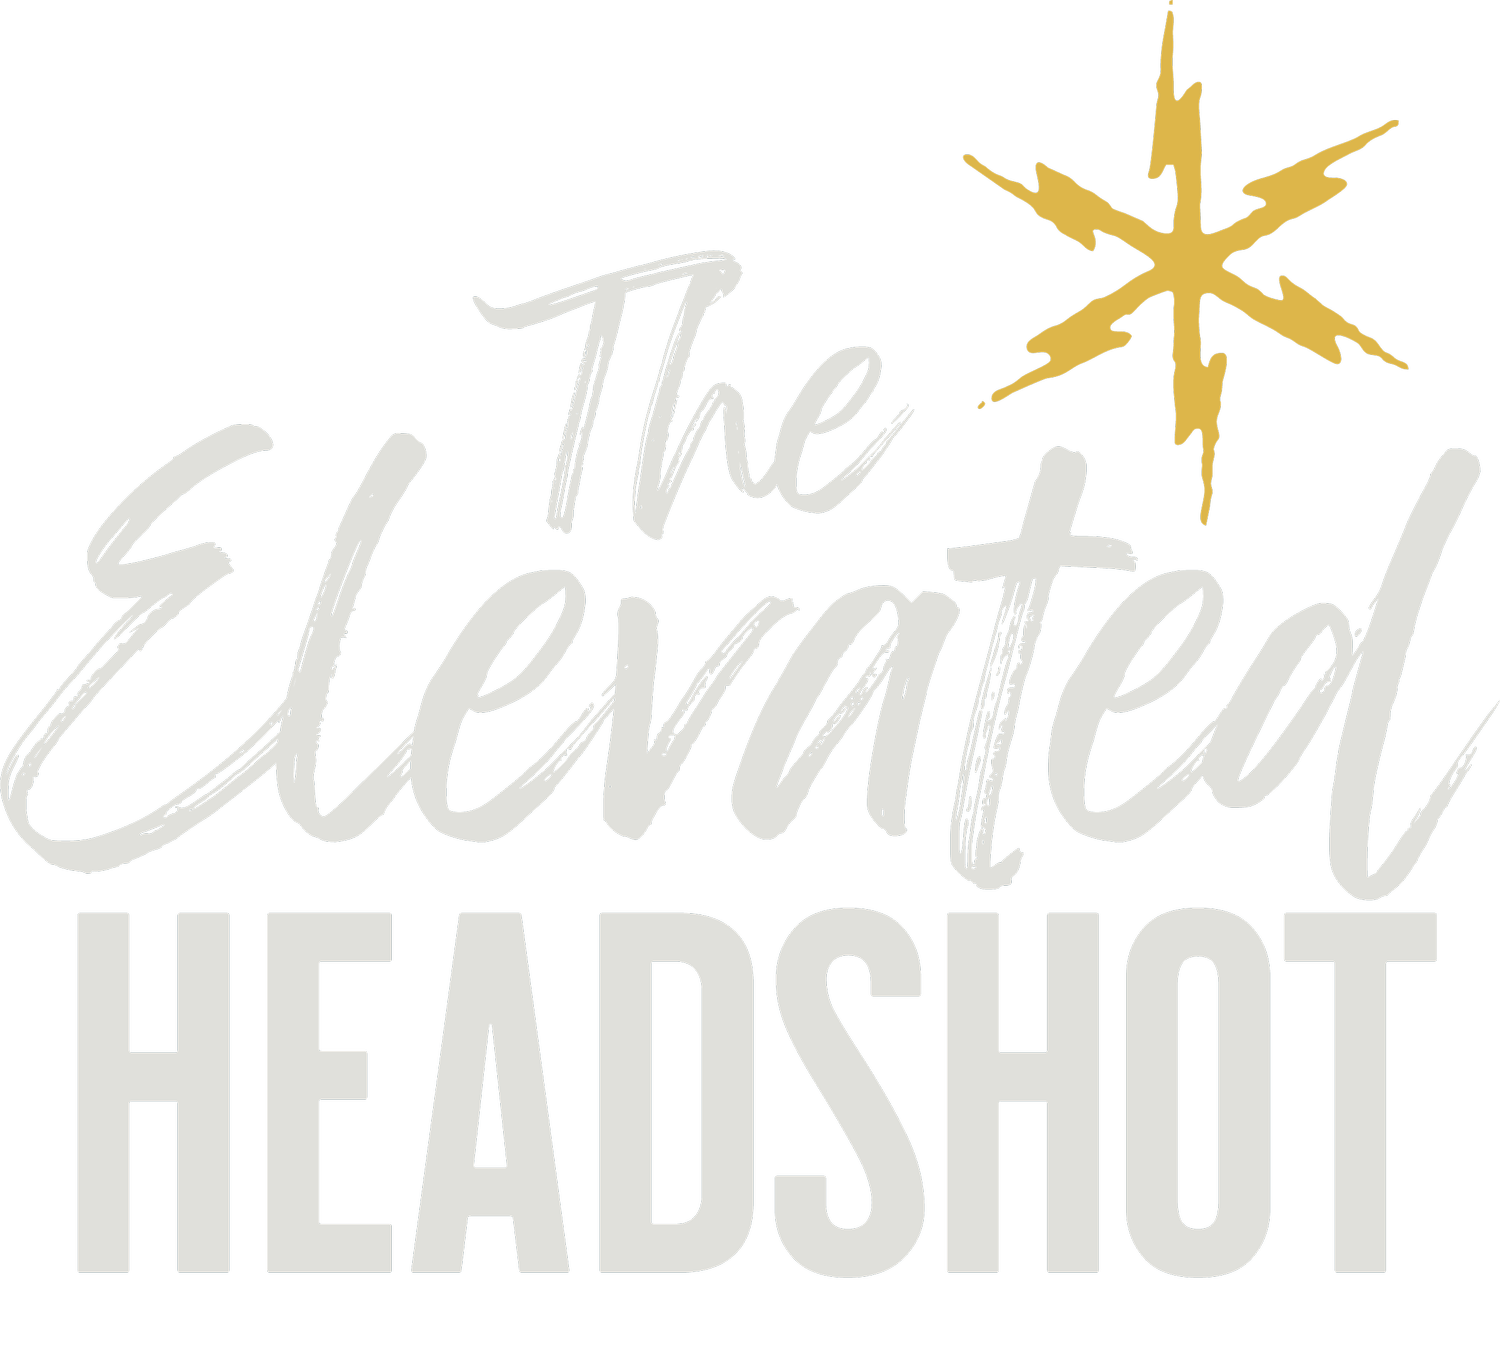 The Elevated Headshot